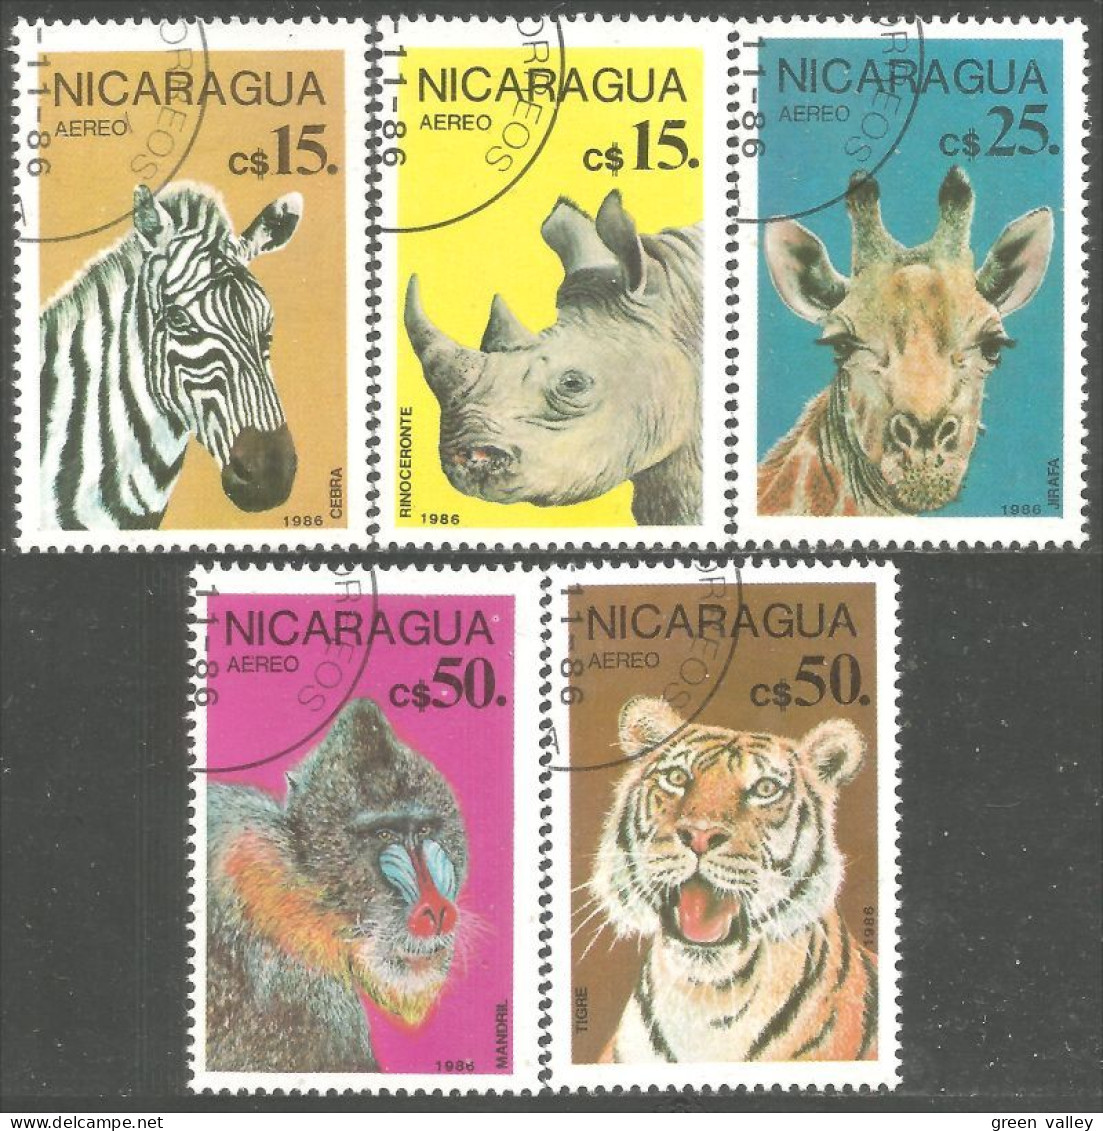 684 Nicaragua Zèbre Zebra Rhinoceros Tiger Tiger Monkey Singe Giraffe Girafe (NIC-533) - Nicaragua